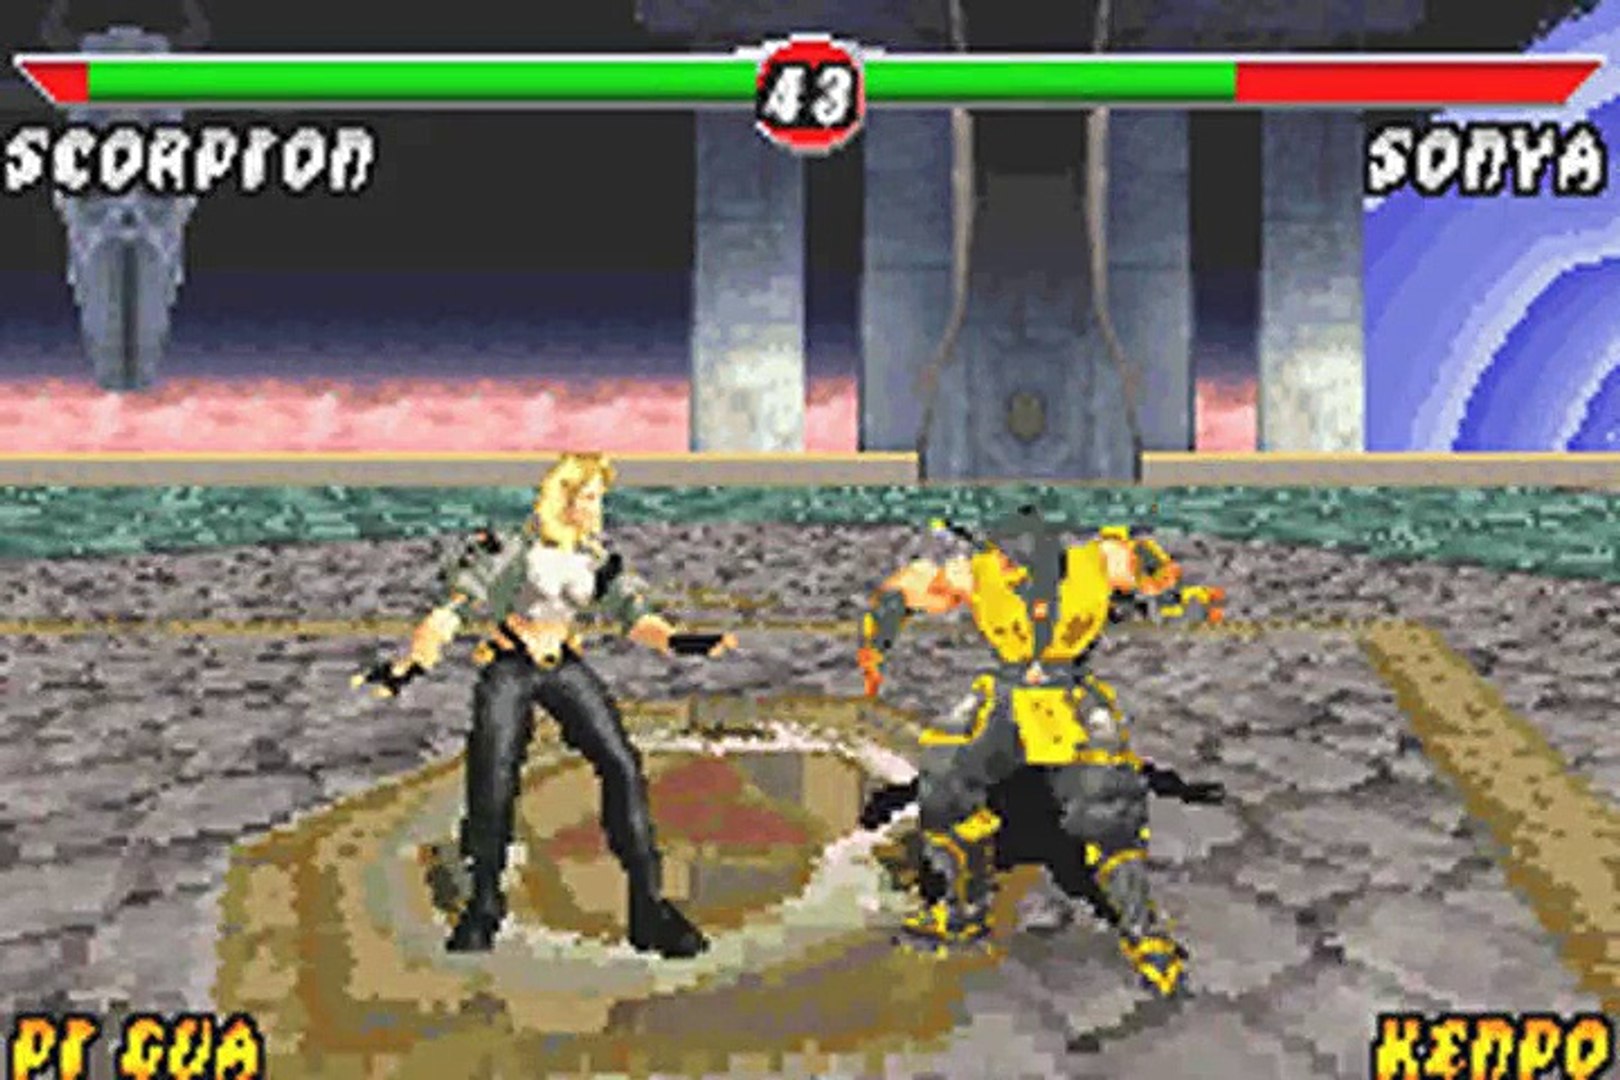 Mortal Kombat : Deadly Alliance online multiplayer - gba - Vidéo